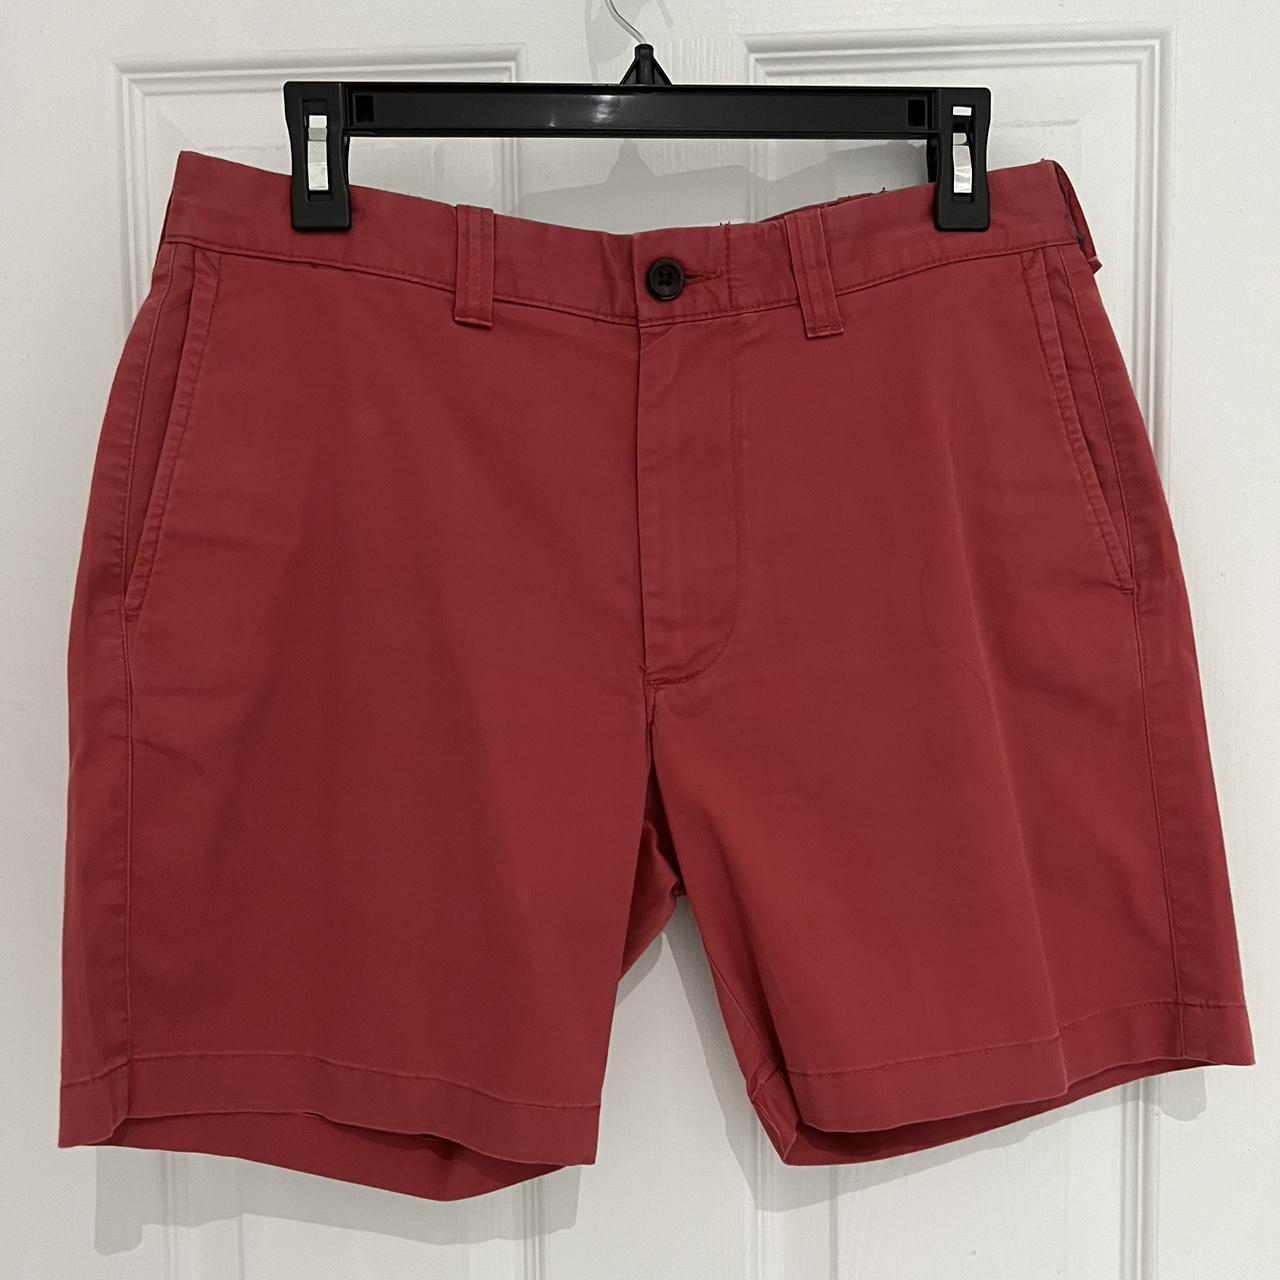 J.Crew Men's Shorts | Depop